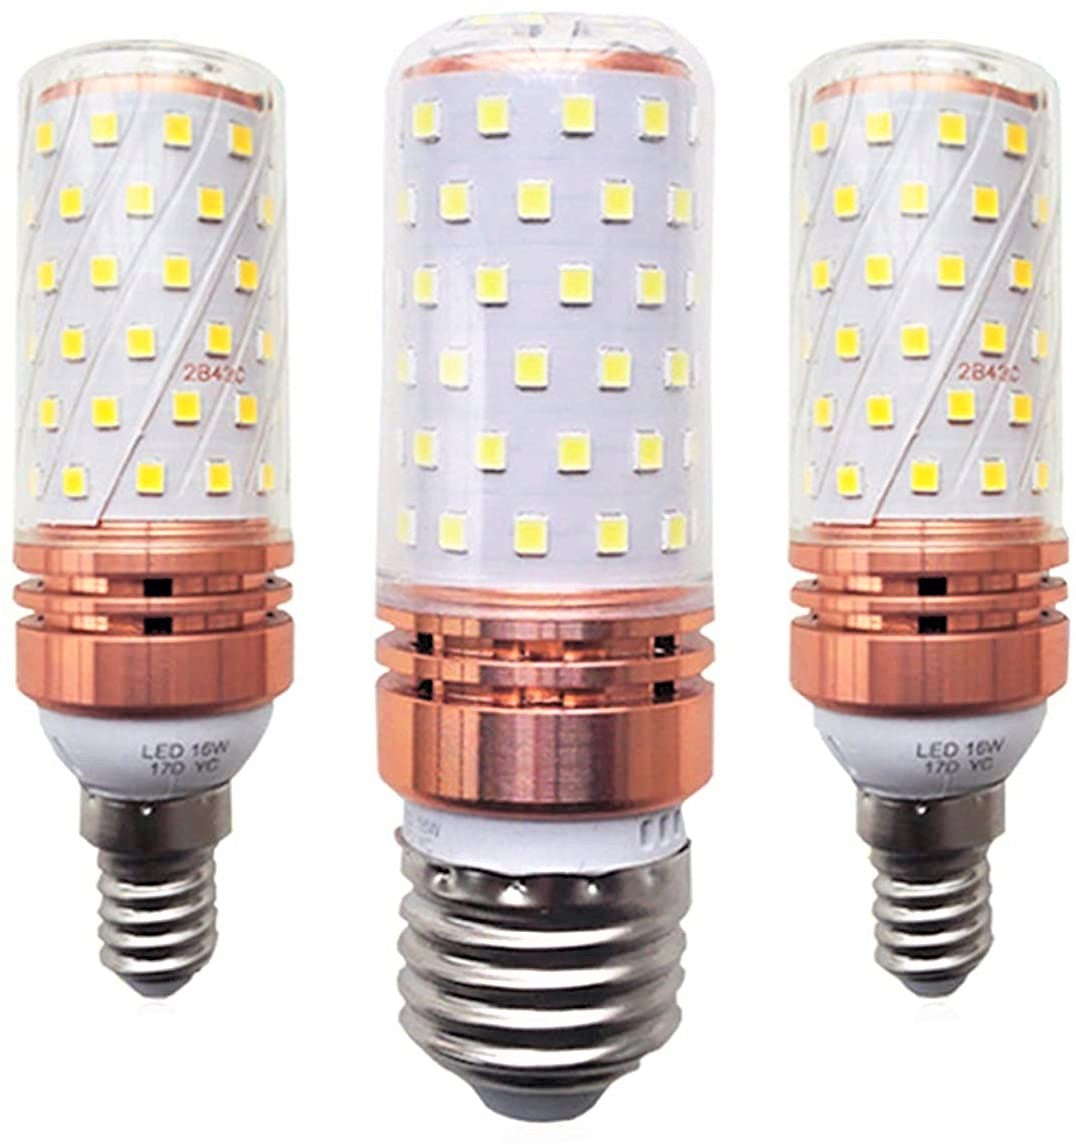 Bec LED E27 16W Corn / 3 functii lumina / Echivalent 120W